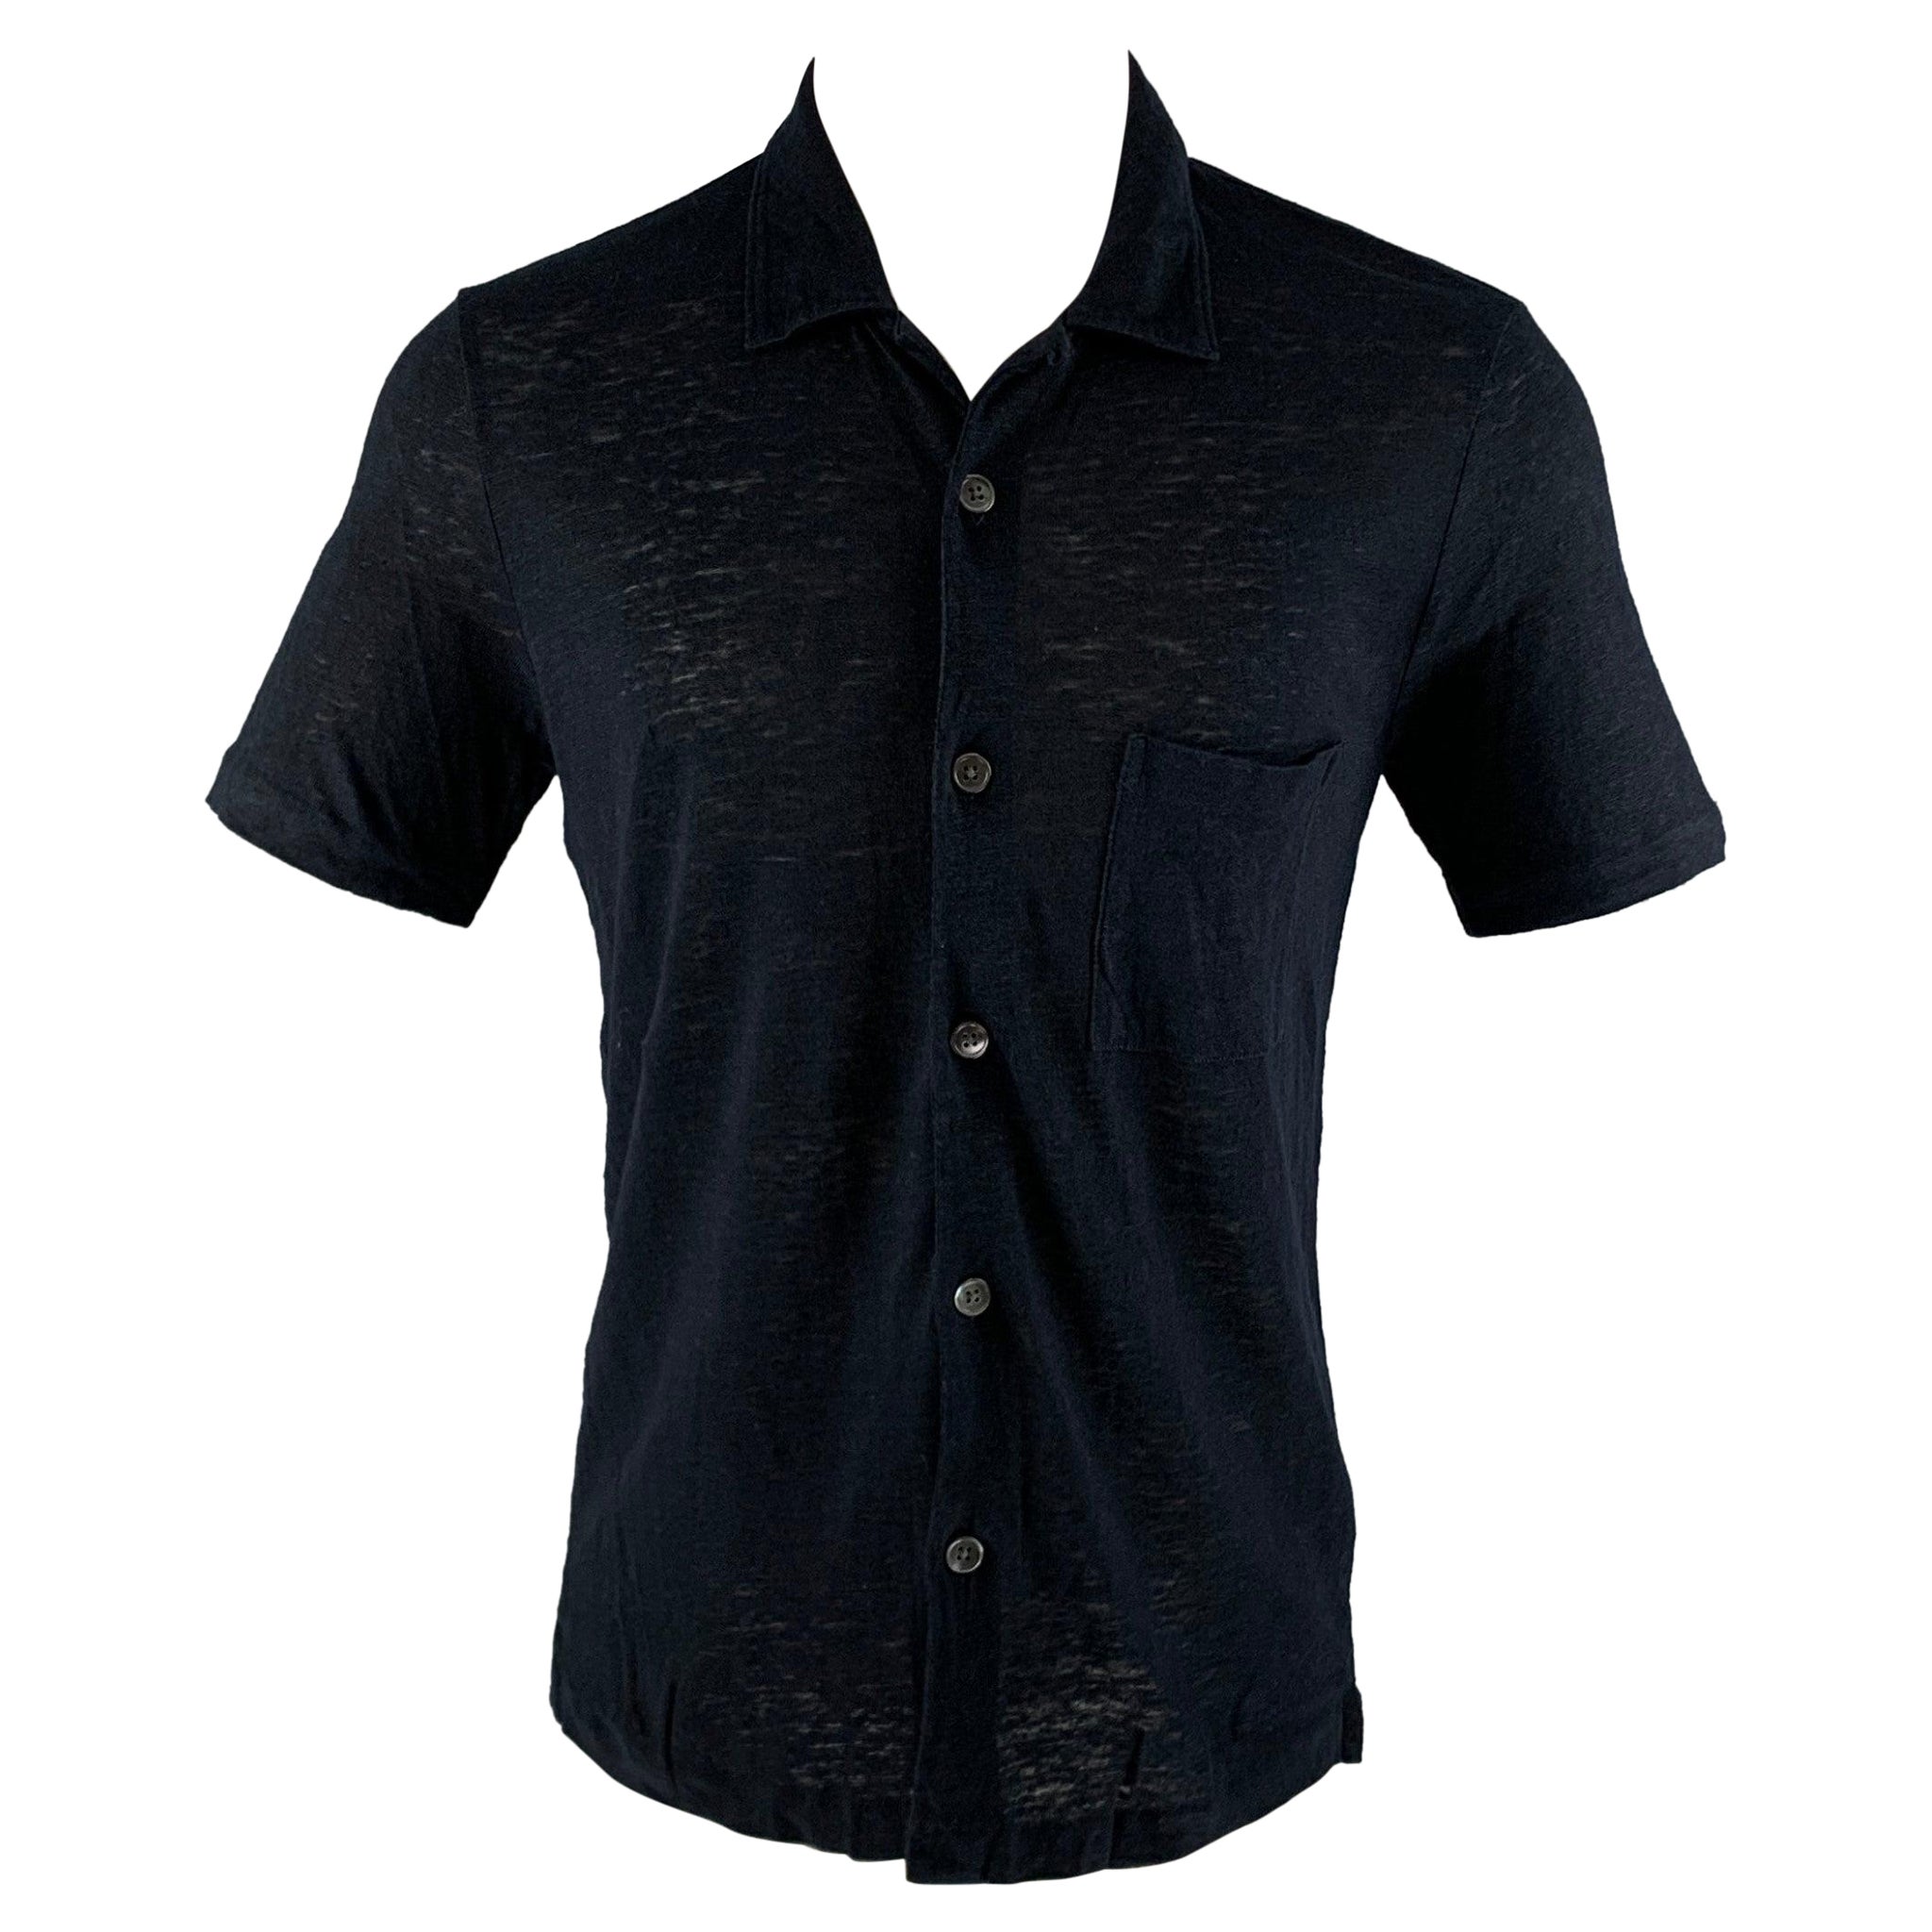 THEORY Size M Black Linen One Pocket Short Sleeve Shirt